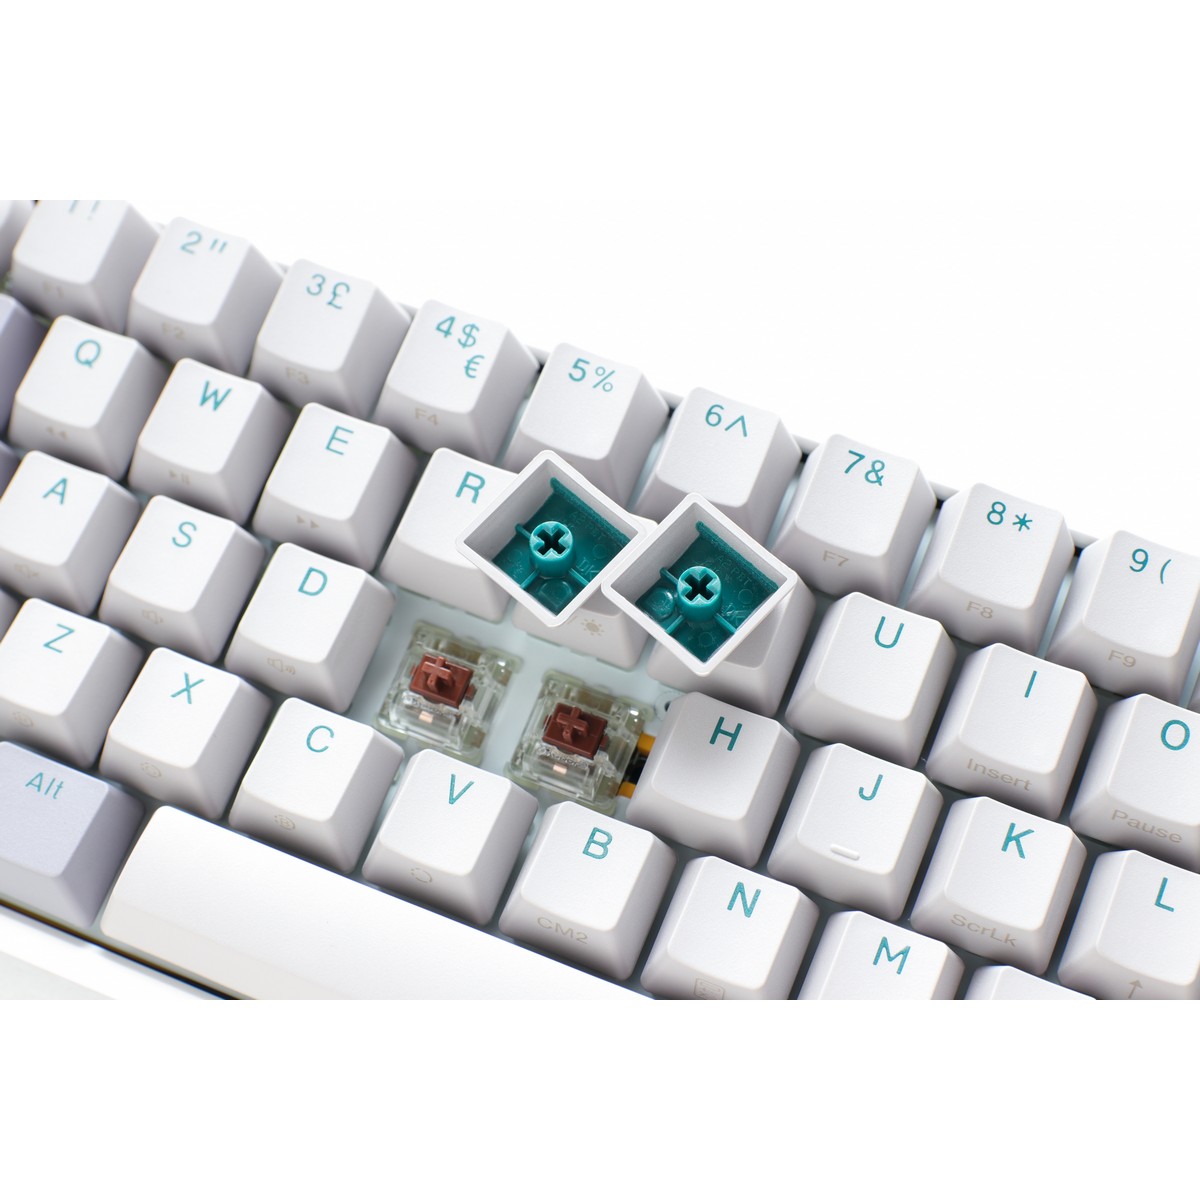 Ducky - Ducky One 3 Mist Mini 60% USB RGB Mechanical Gaming Keyboard Cherry MX Brown Switch - UK Layout